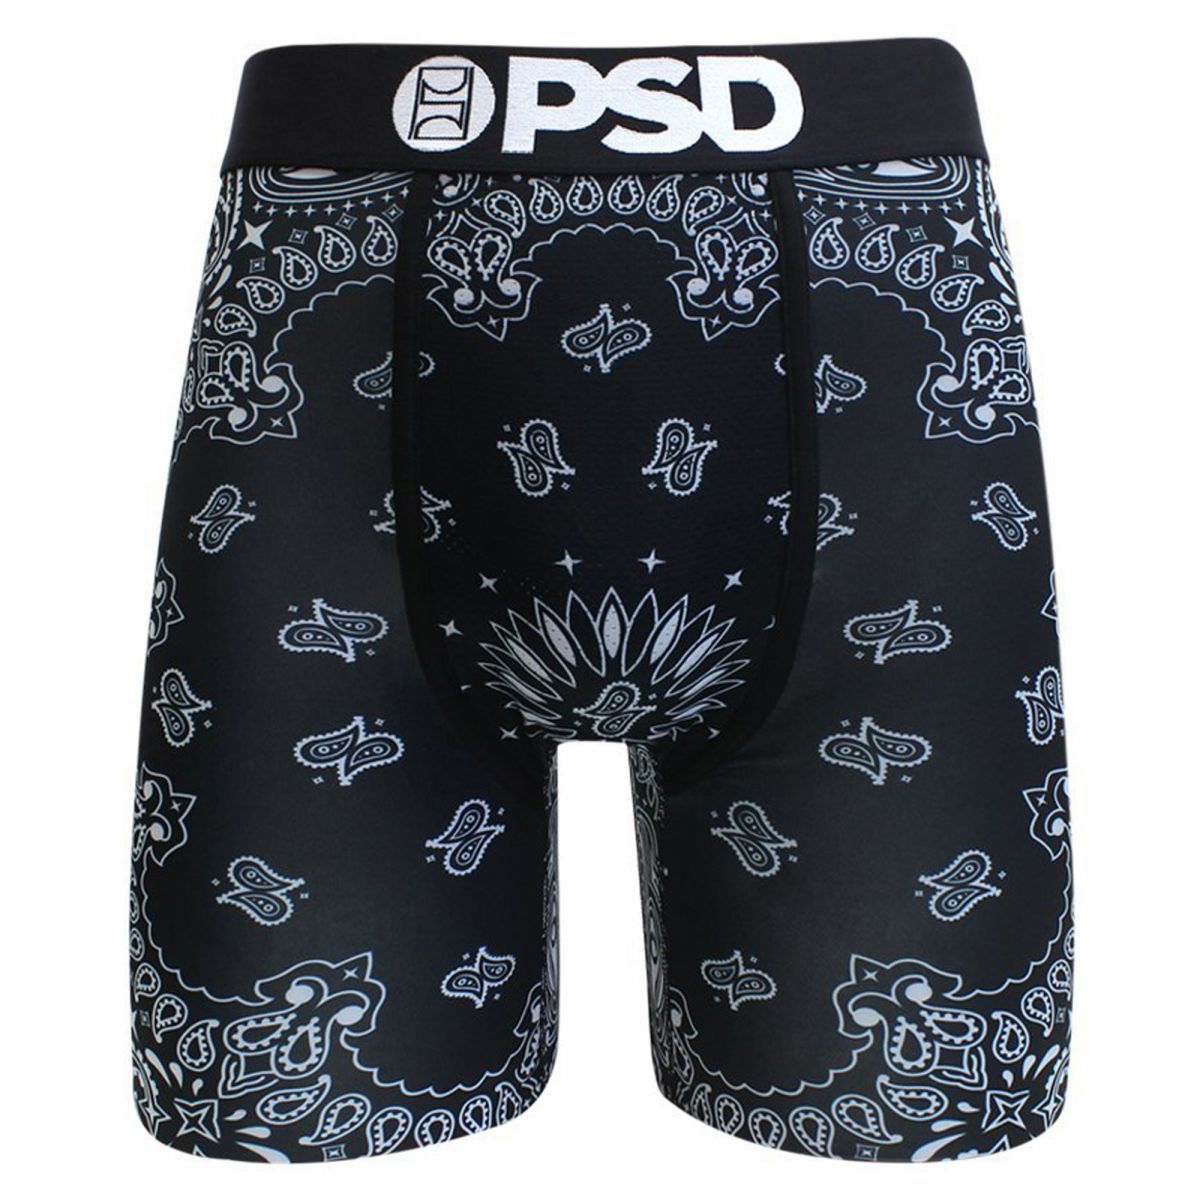 PSD UNDERWEAR Black Bandana Underwear E21911050 - Karmaloop